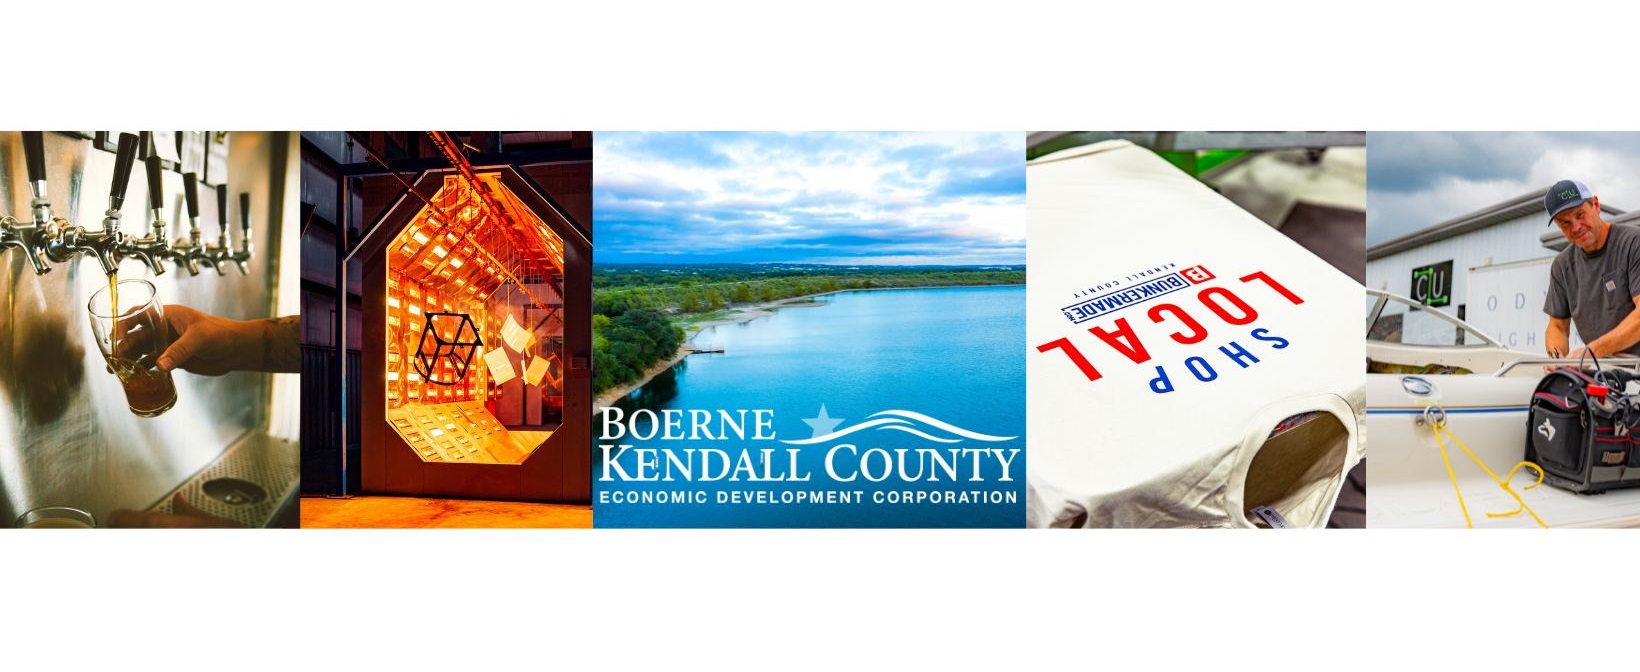 Boerne Kendall County Economic Development Corporation